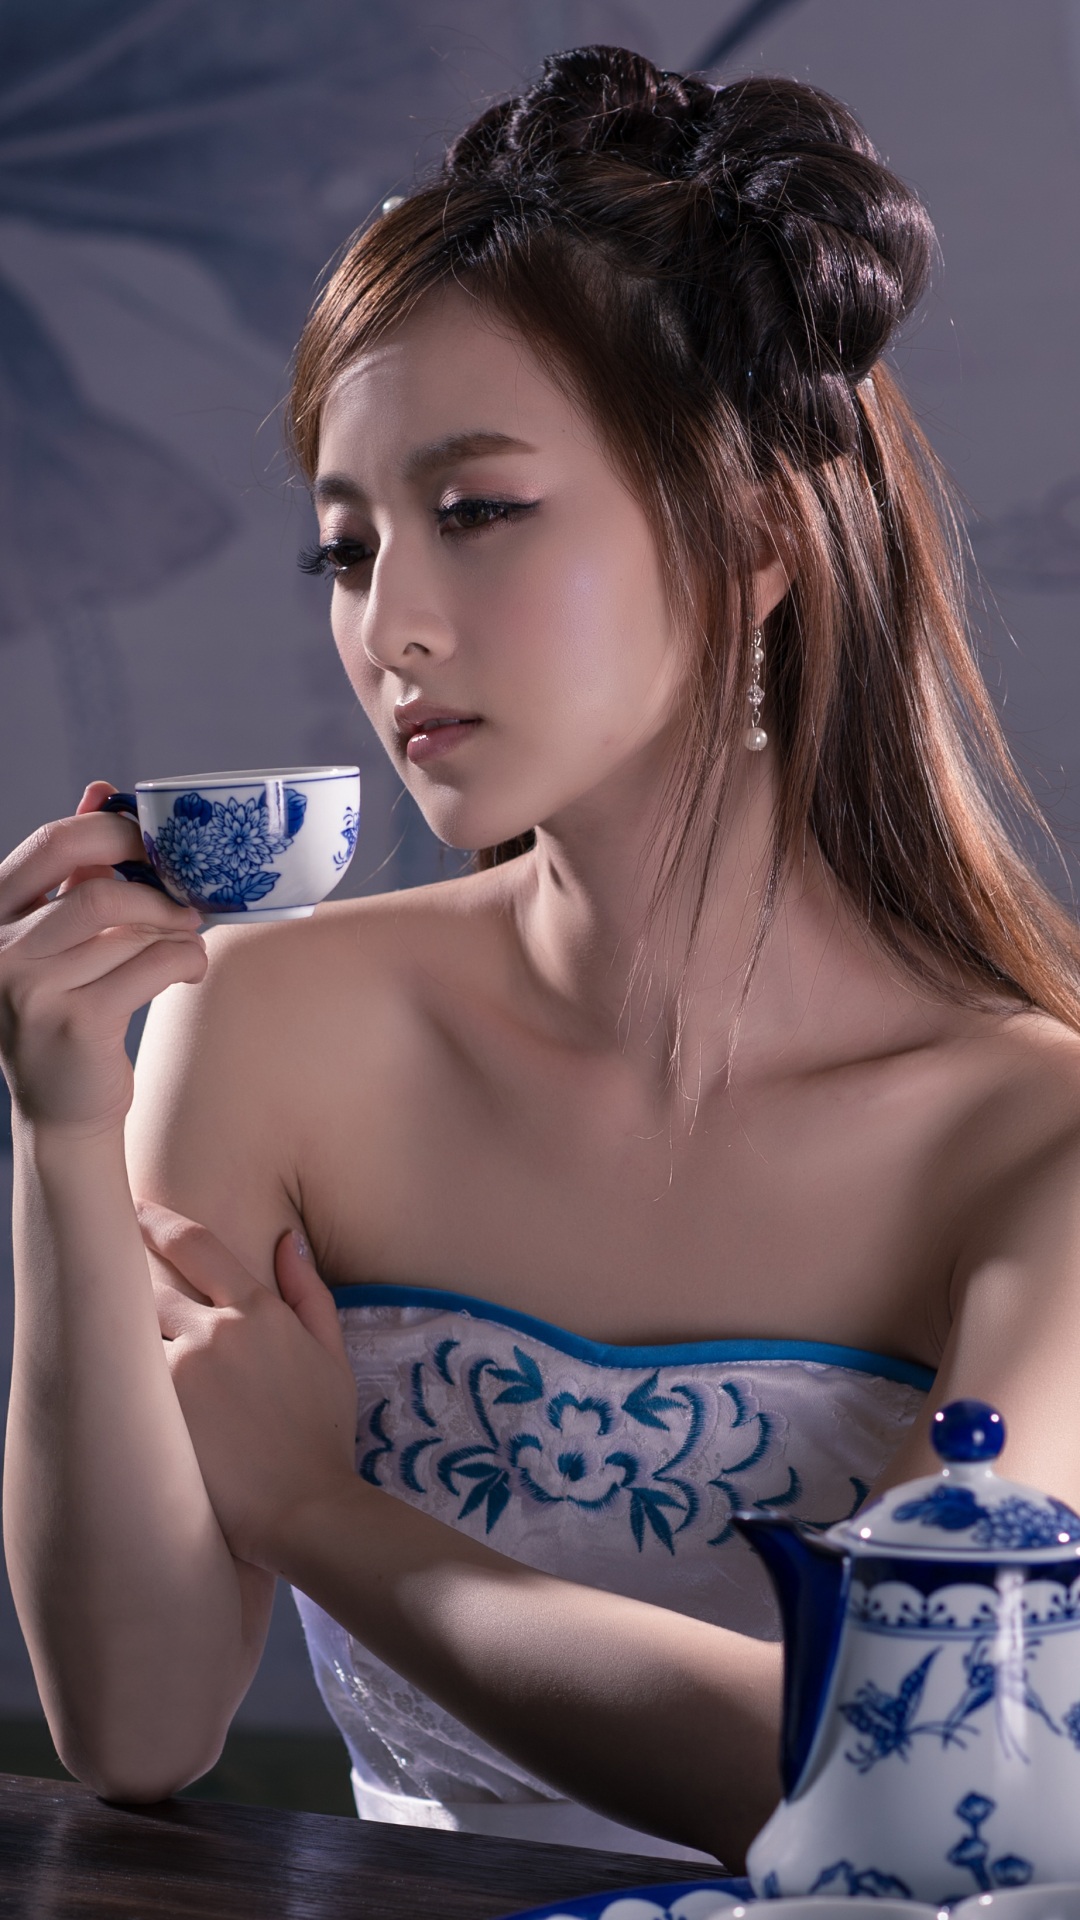 china, dress, women, mikako zhang kaijie, asian, taiwanese, chinese, cup, hair dress, tea set